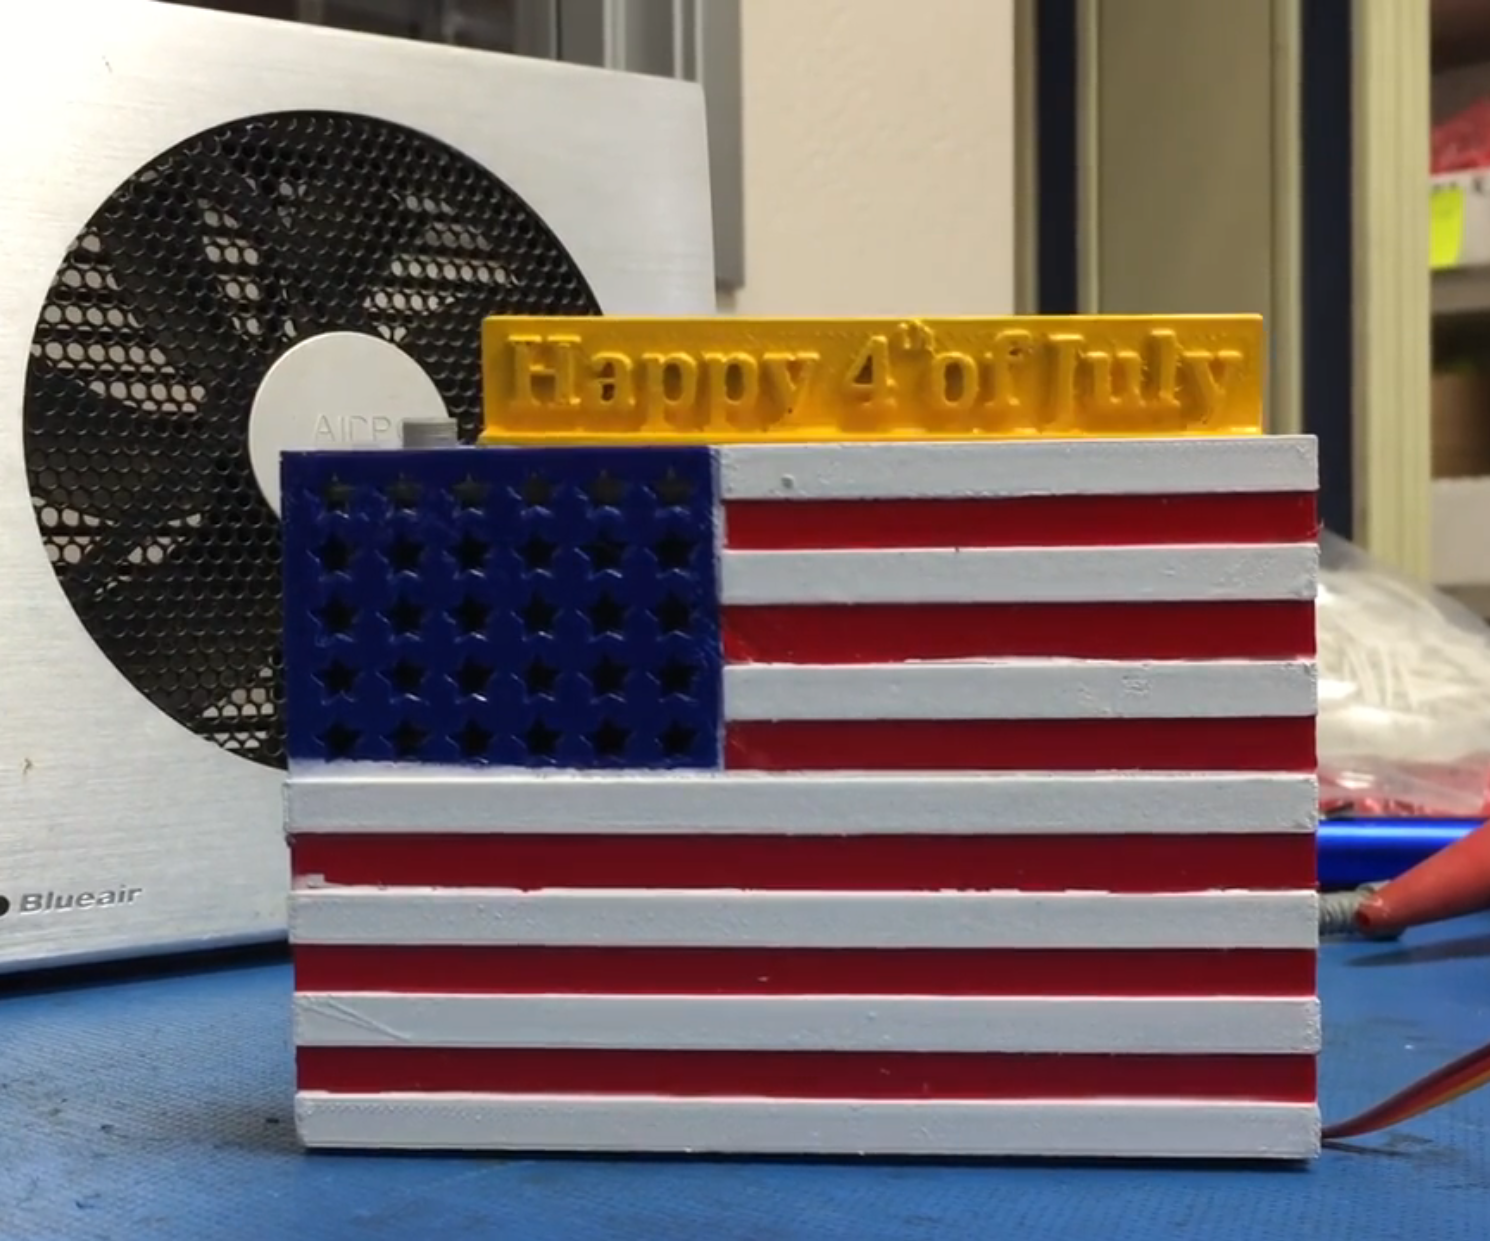 The Fourth of July Celebration Box